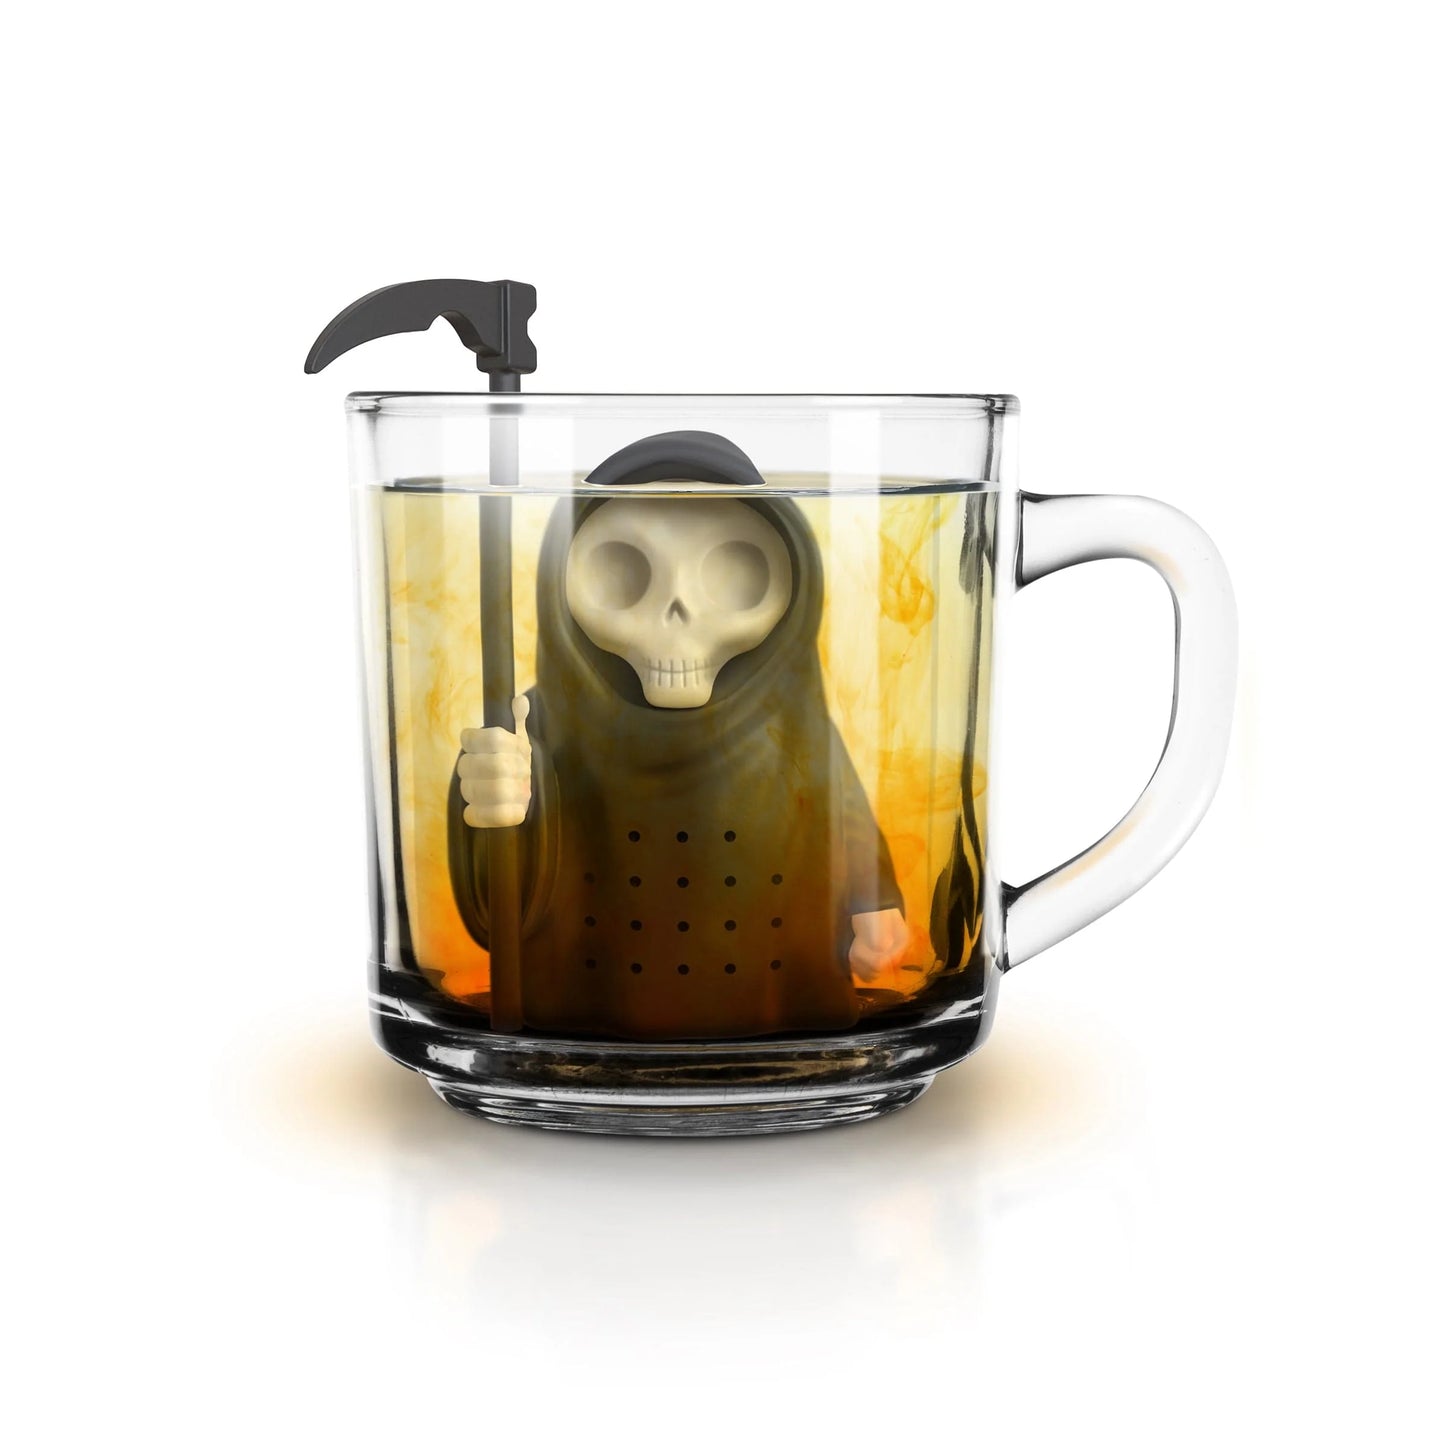 Grim Steeper Tea Infuser in a clear glass steeping tea.